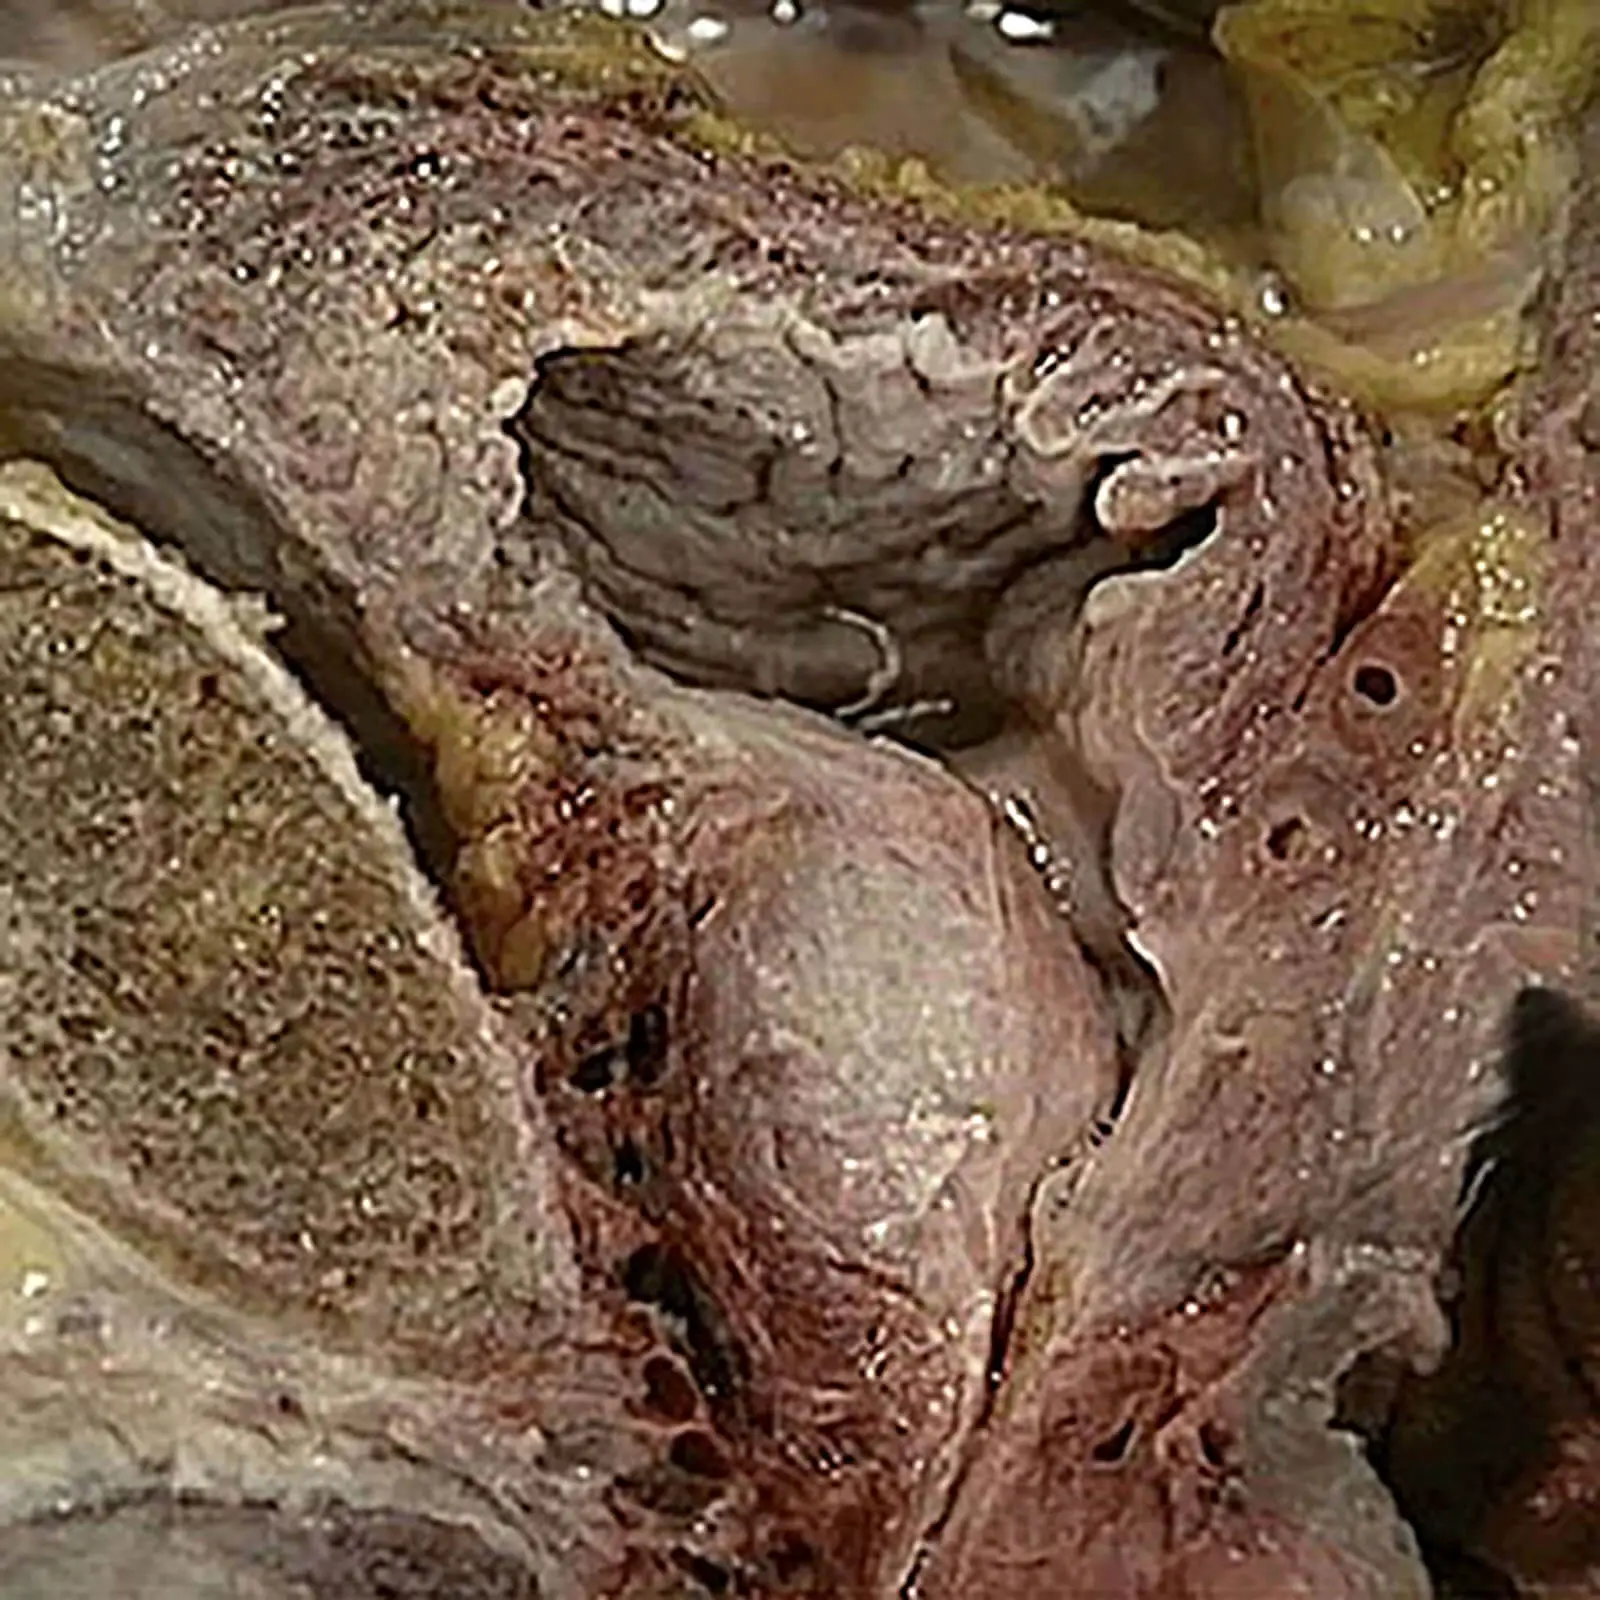 Photo Of A Prostate Gland